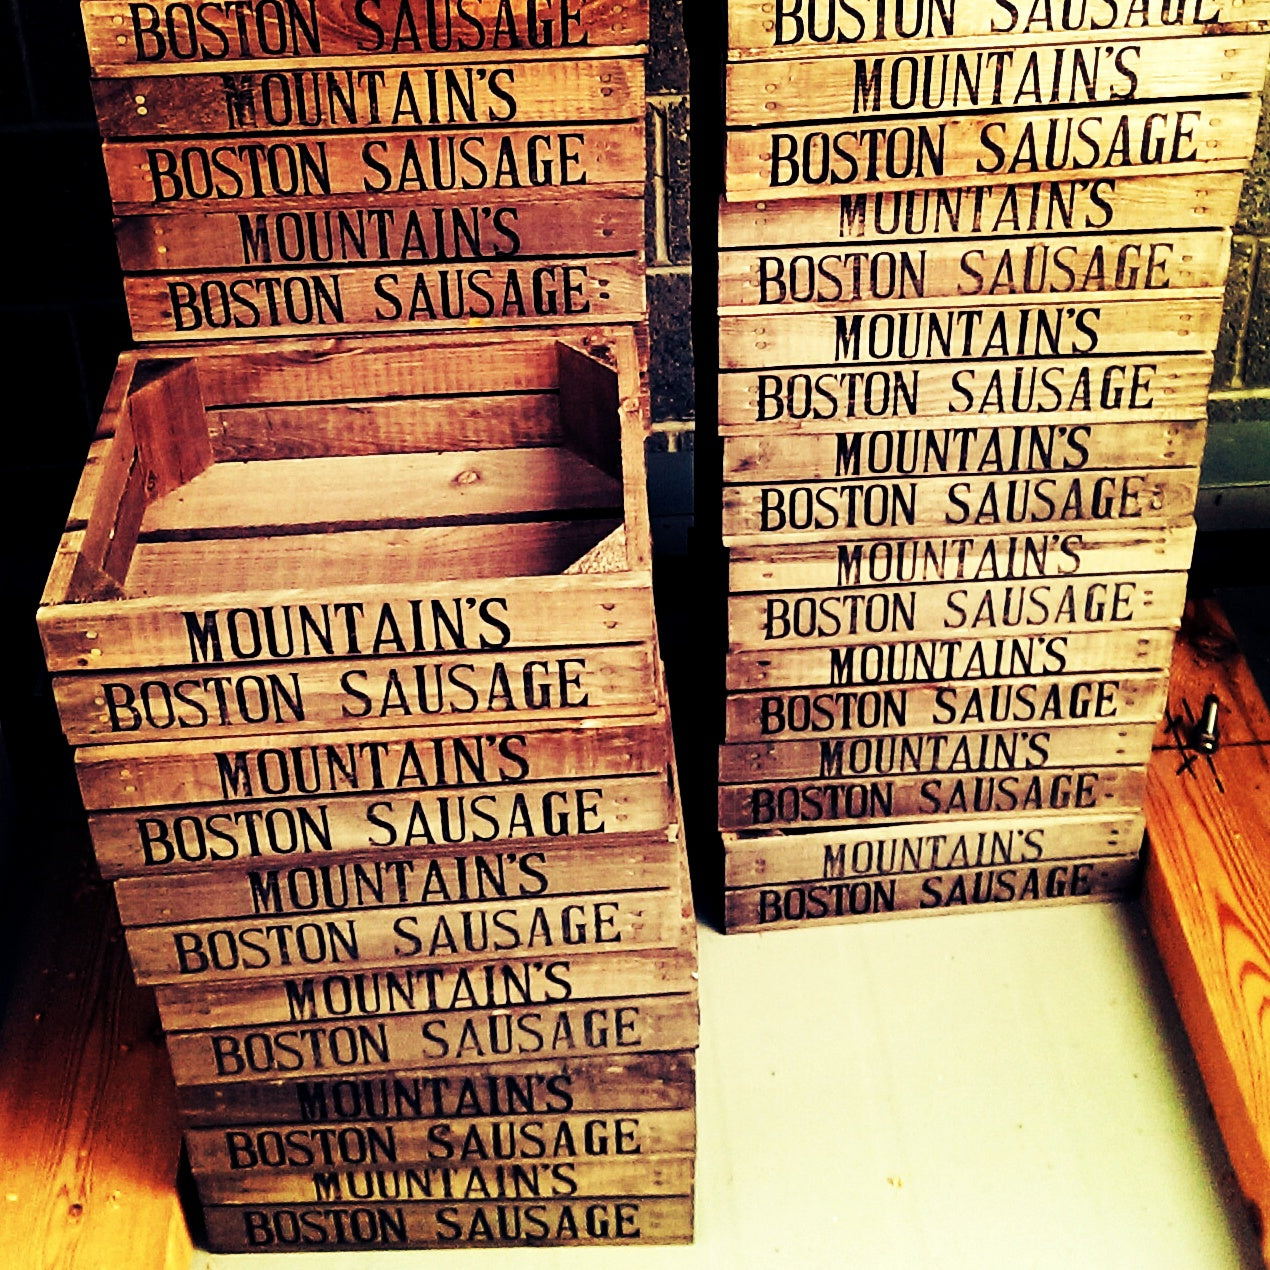 Mountain's Boston Sausage Wooden Crate